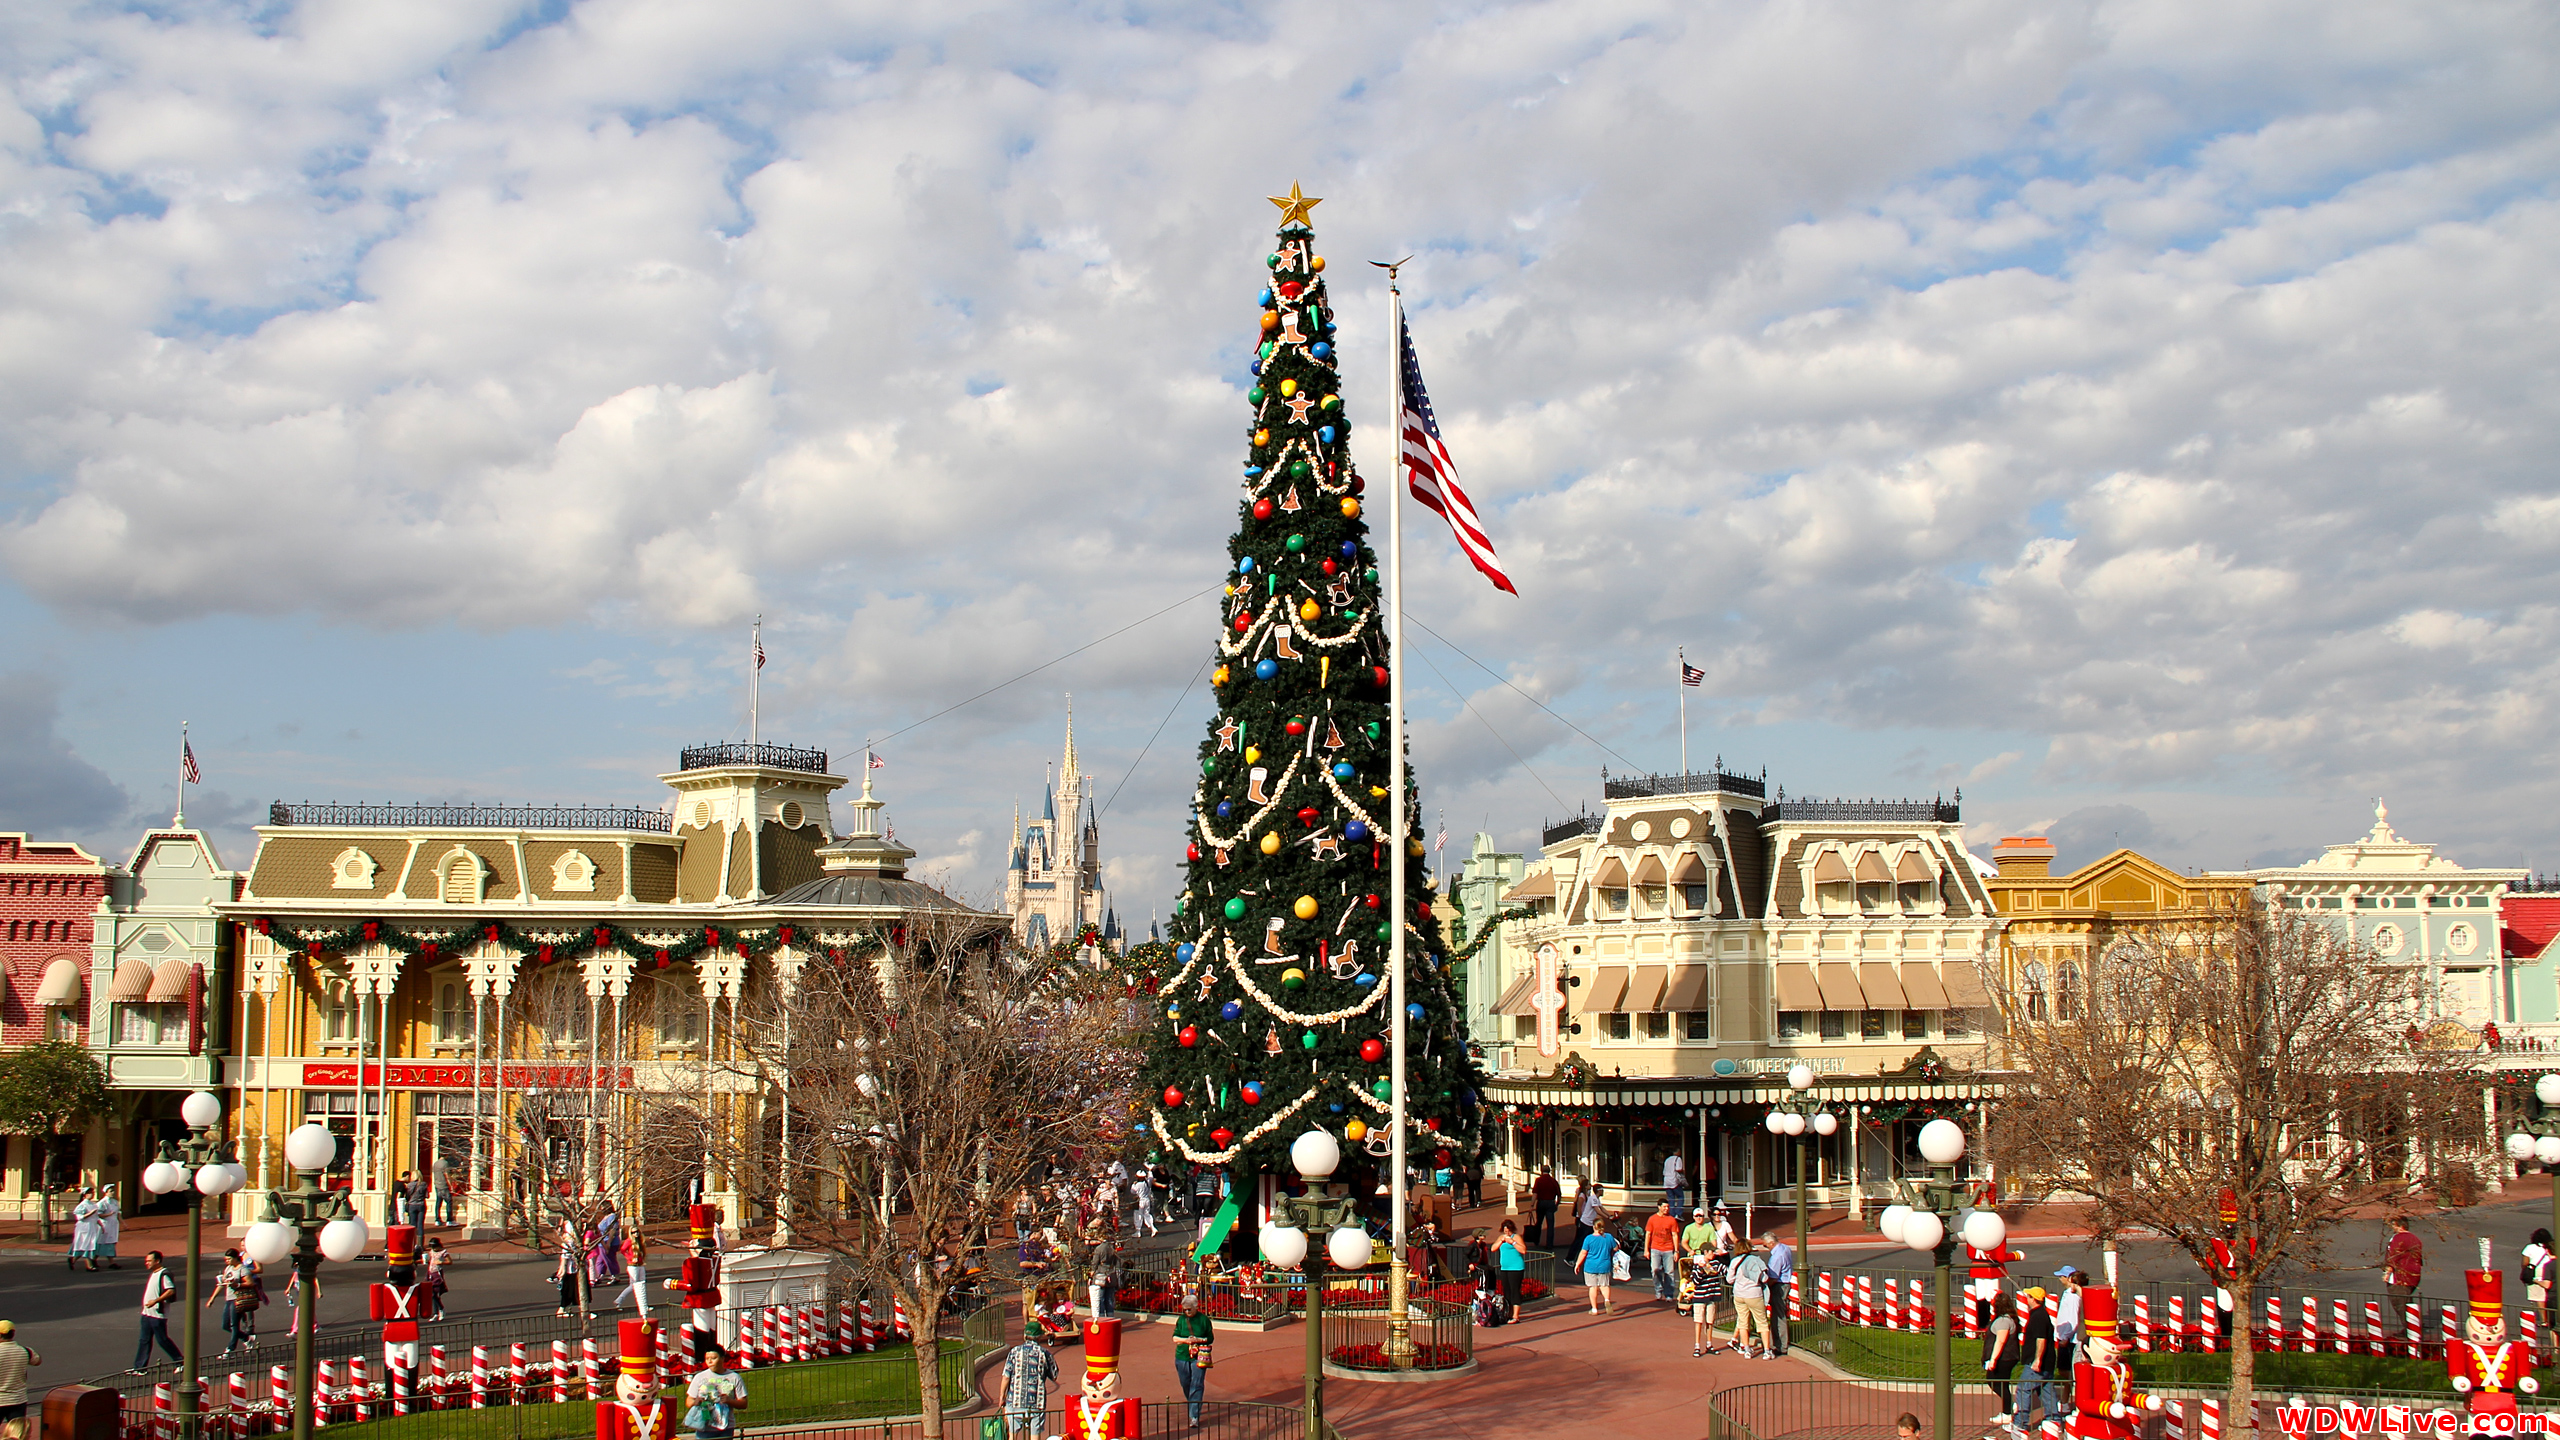 Main Street U.S.A. The Magic Kingdoms giant Christmas tree